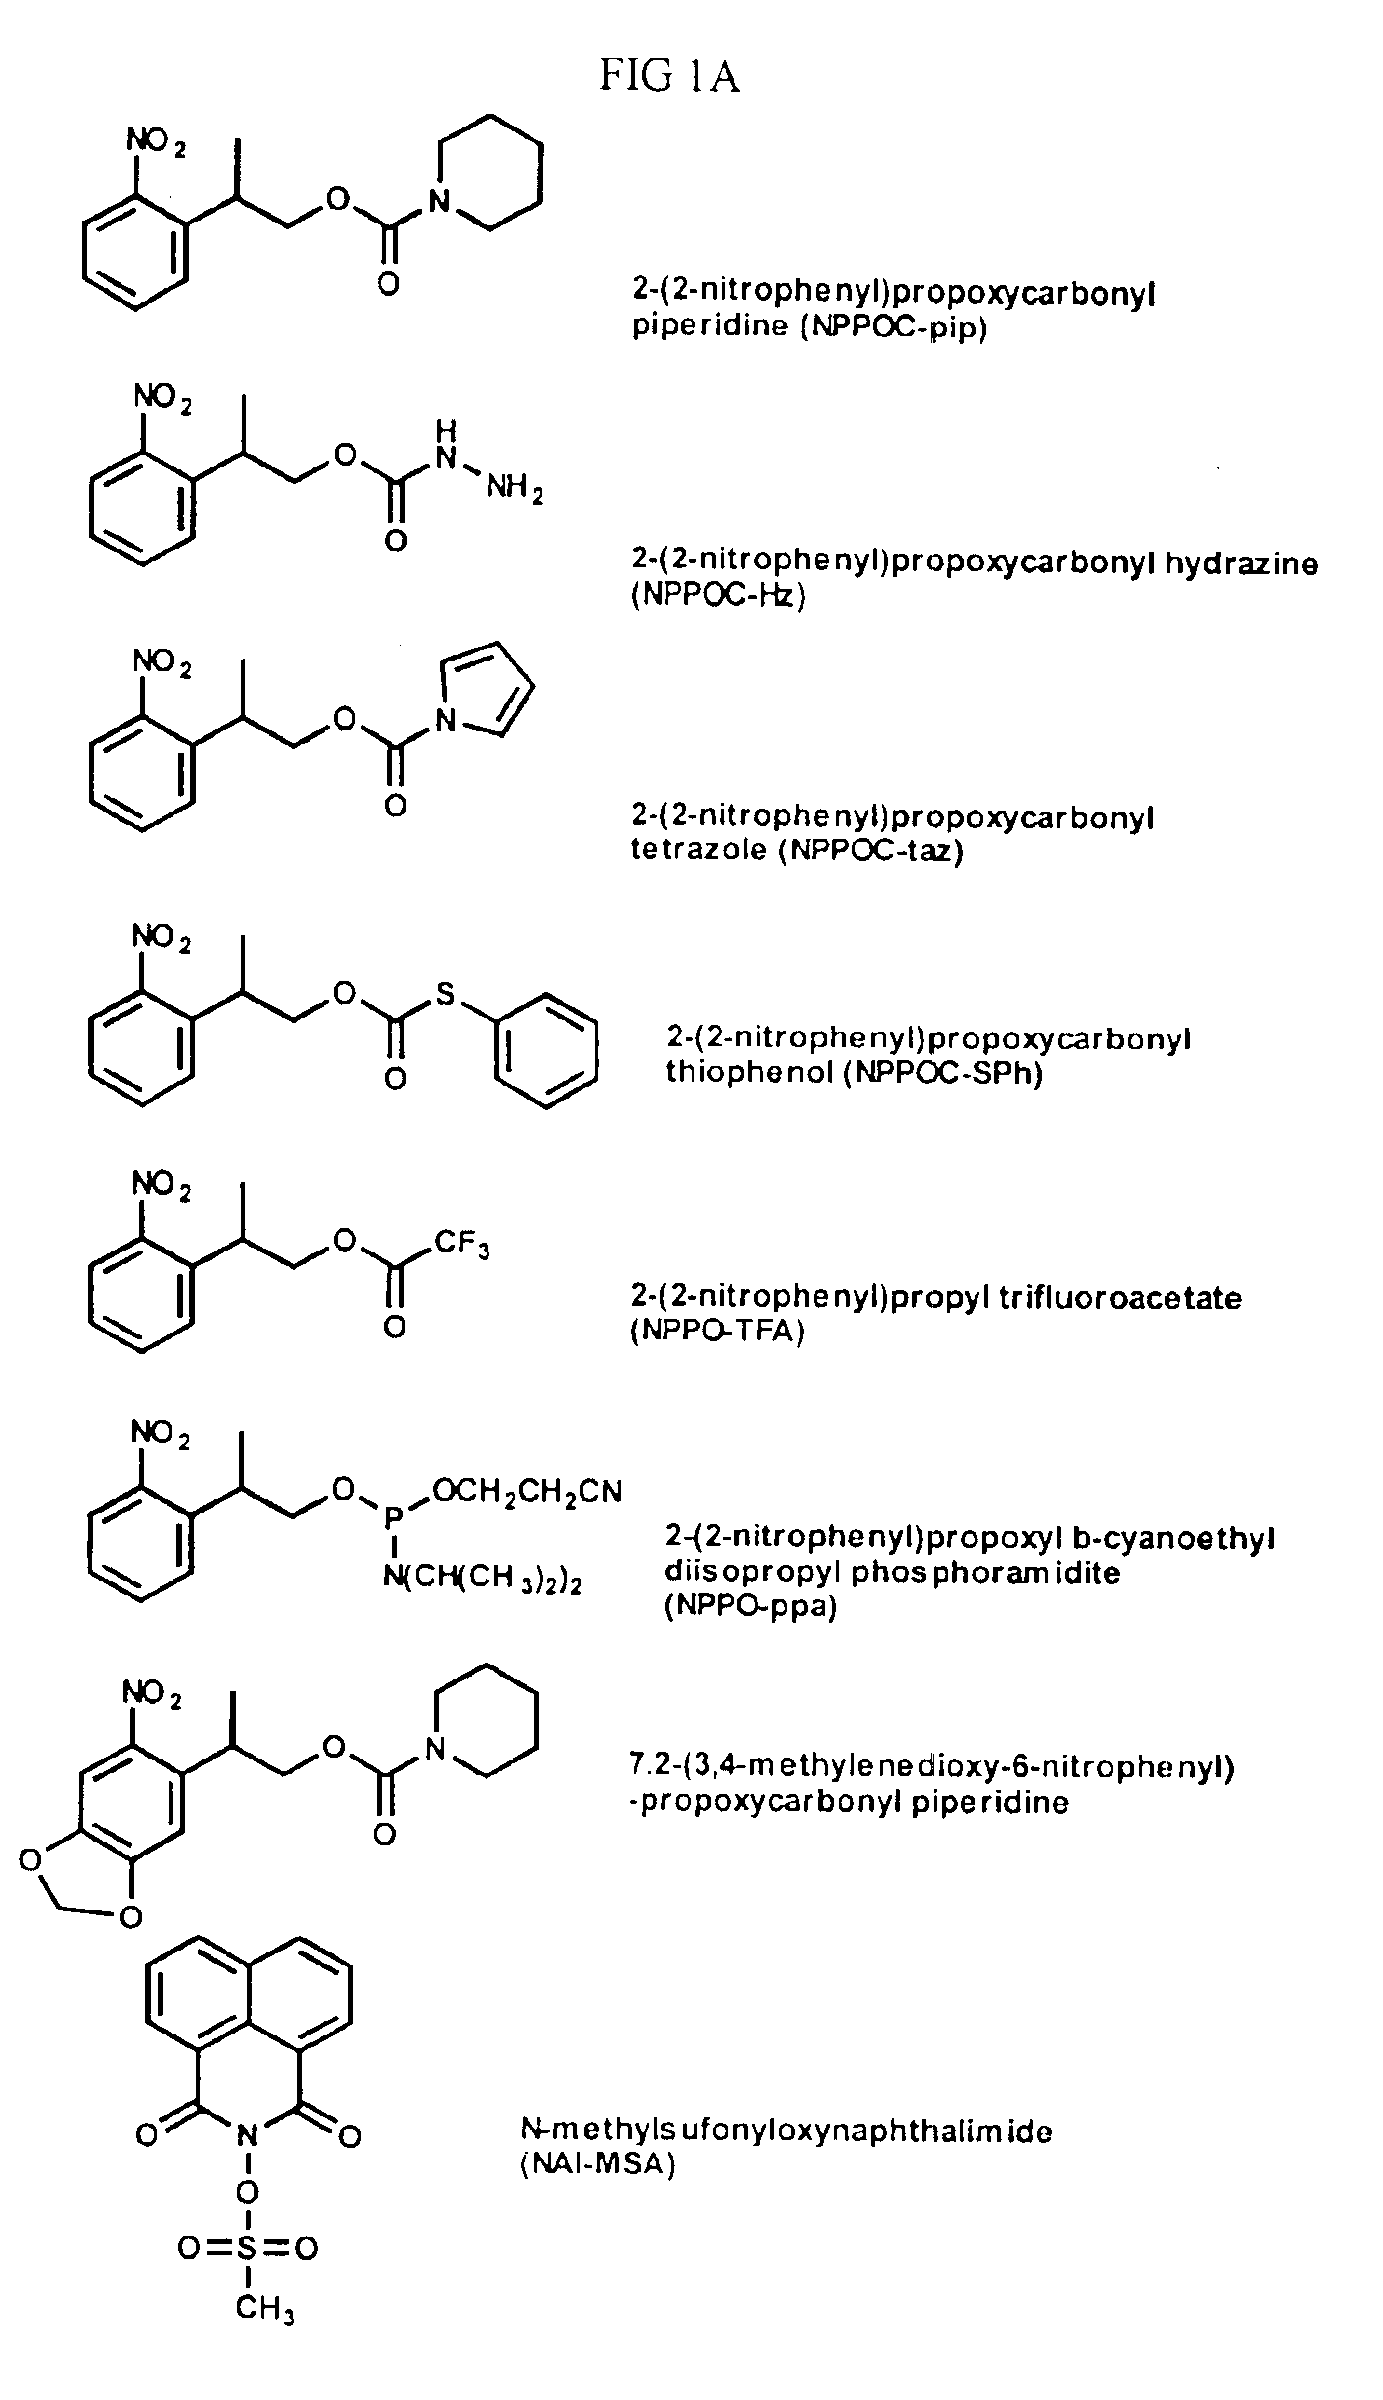 Photogenerated reagents